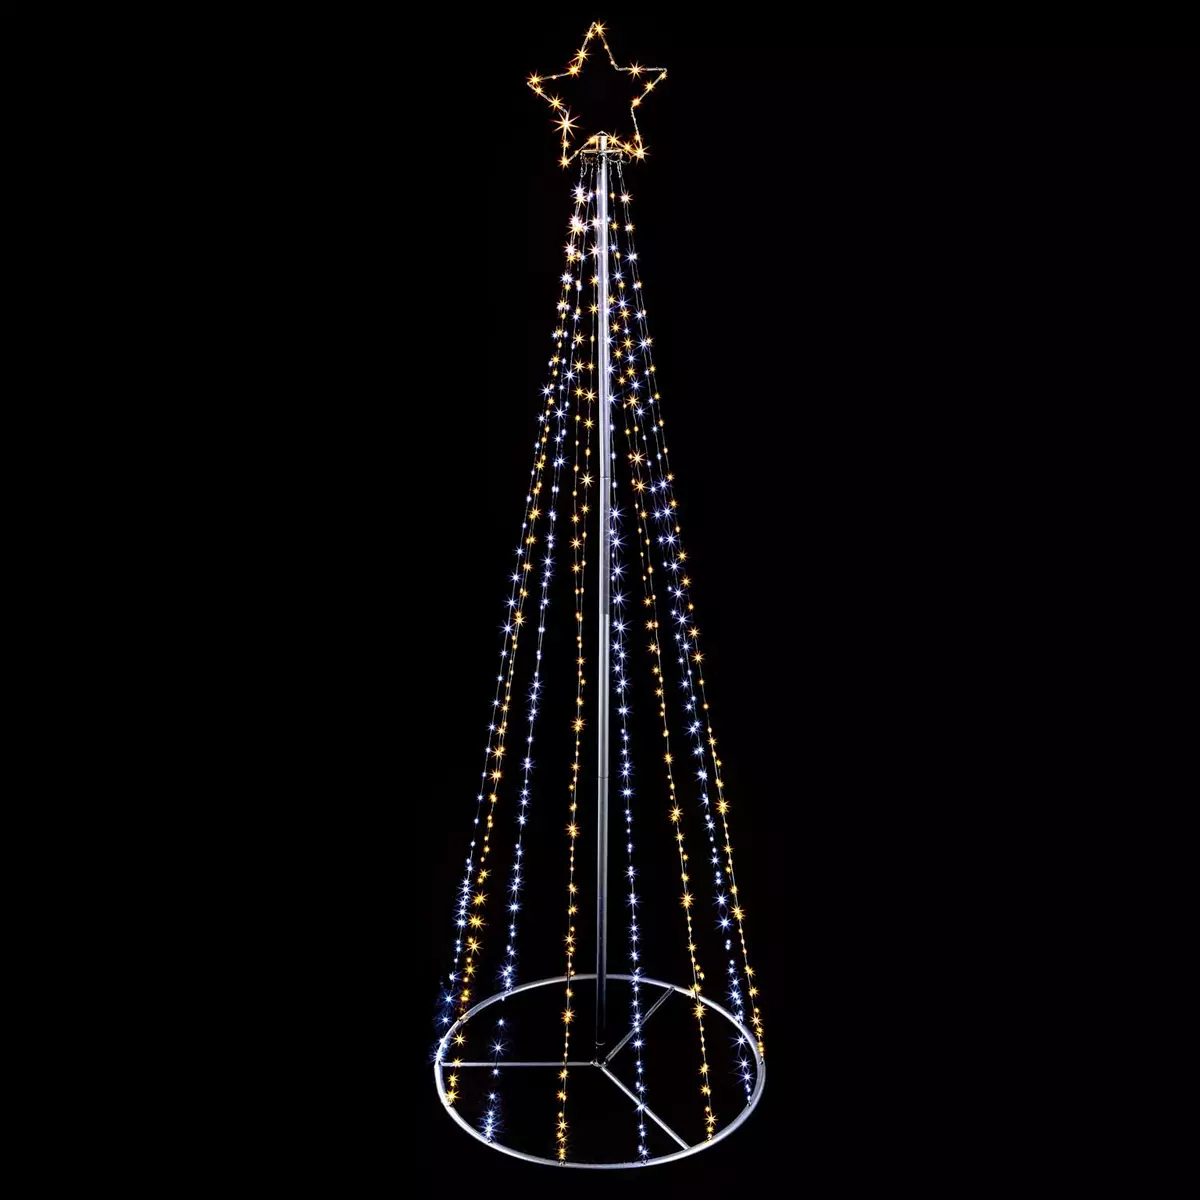 LED Pinwire Pyramid Tree - XLarge - Warm/Cool White - 2.5m